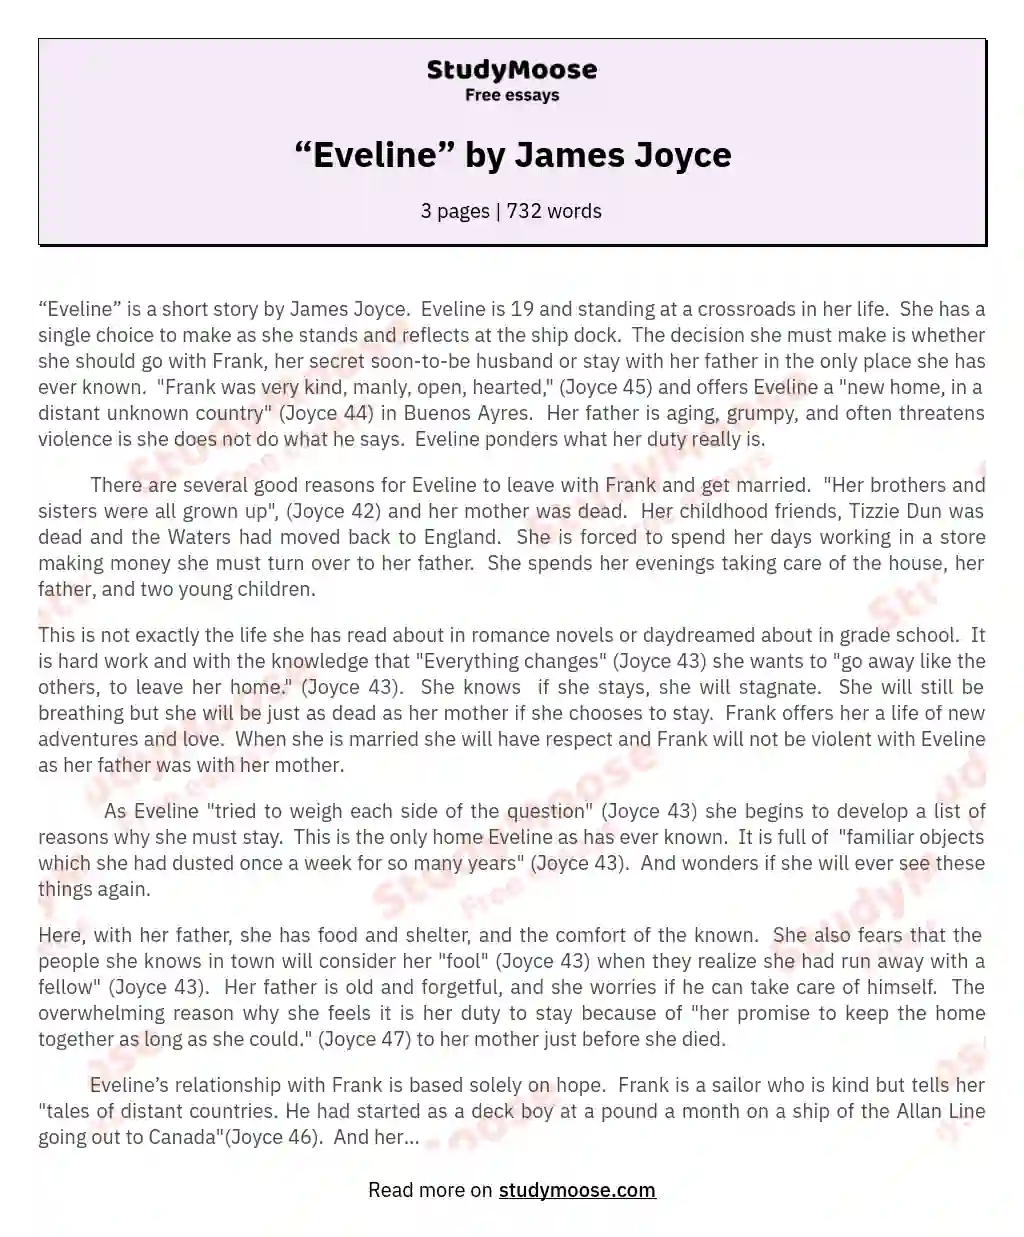 “Eveline” by James Joyce essay